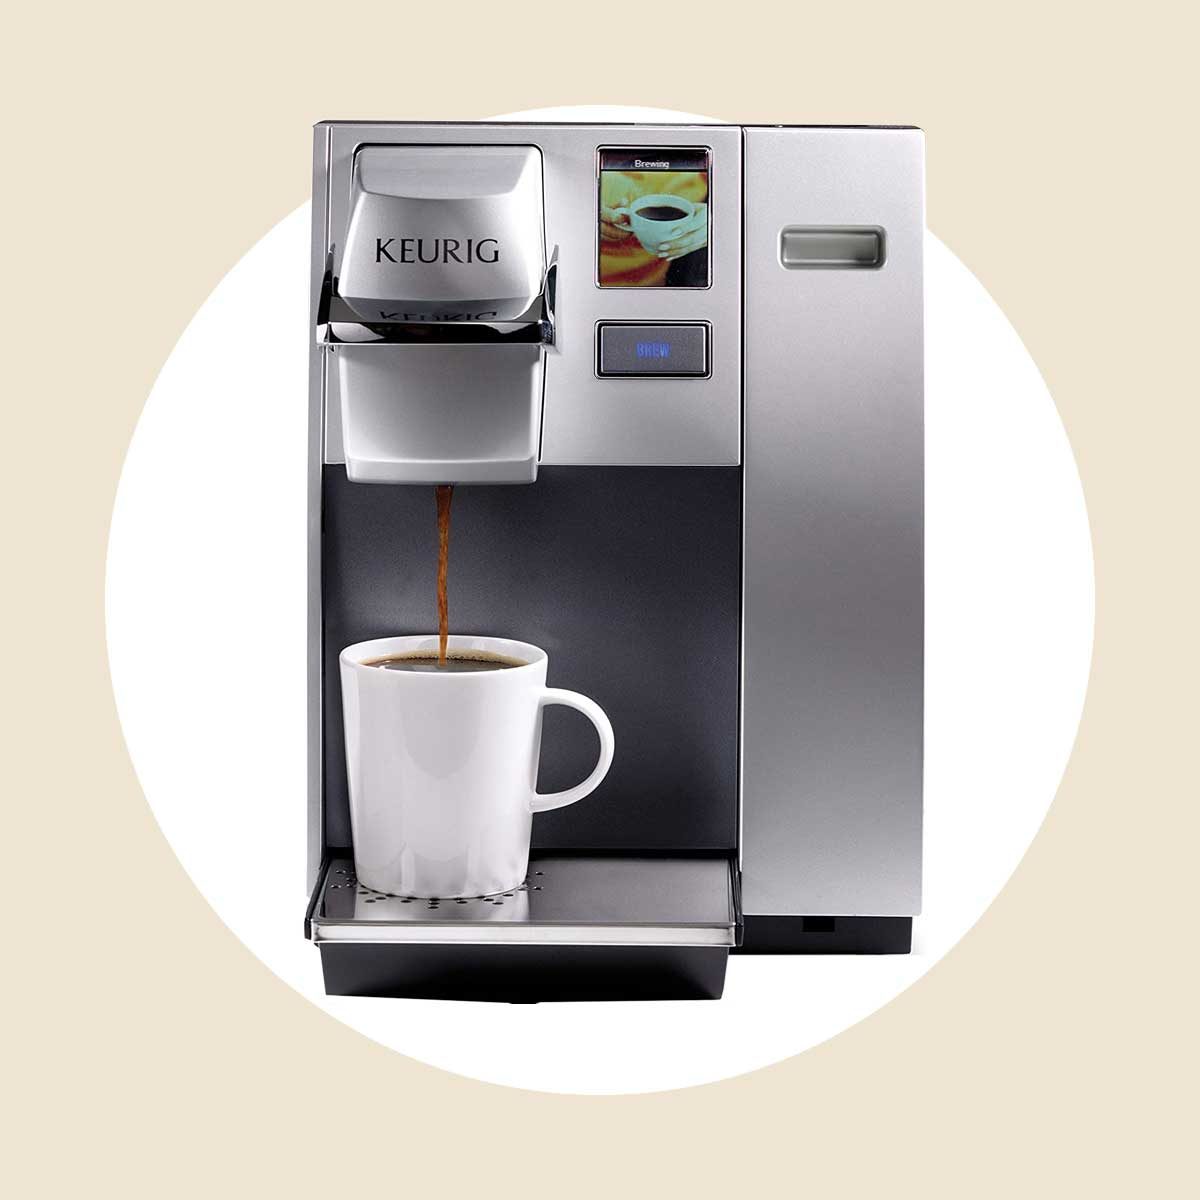 Keurig Office Pro Coffee Maker Ecomm Via Amazon